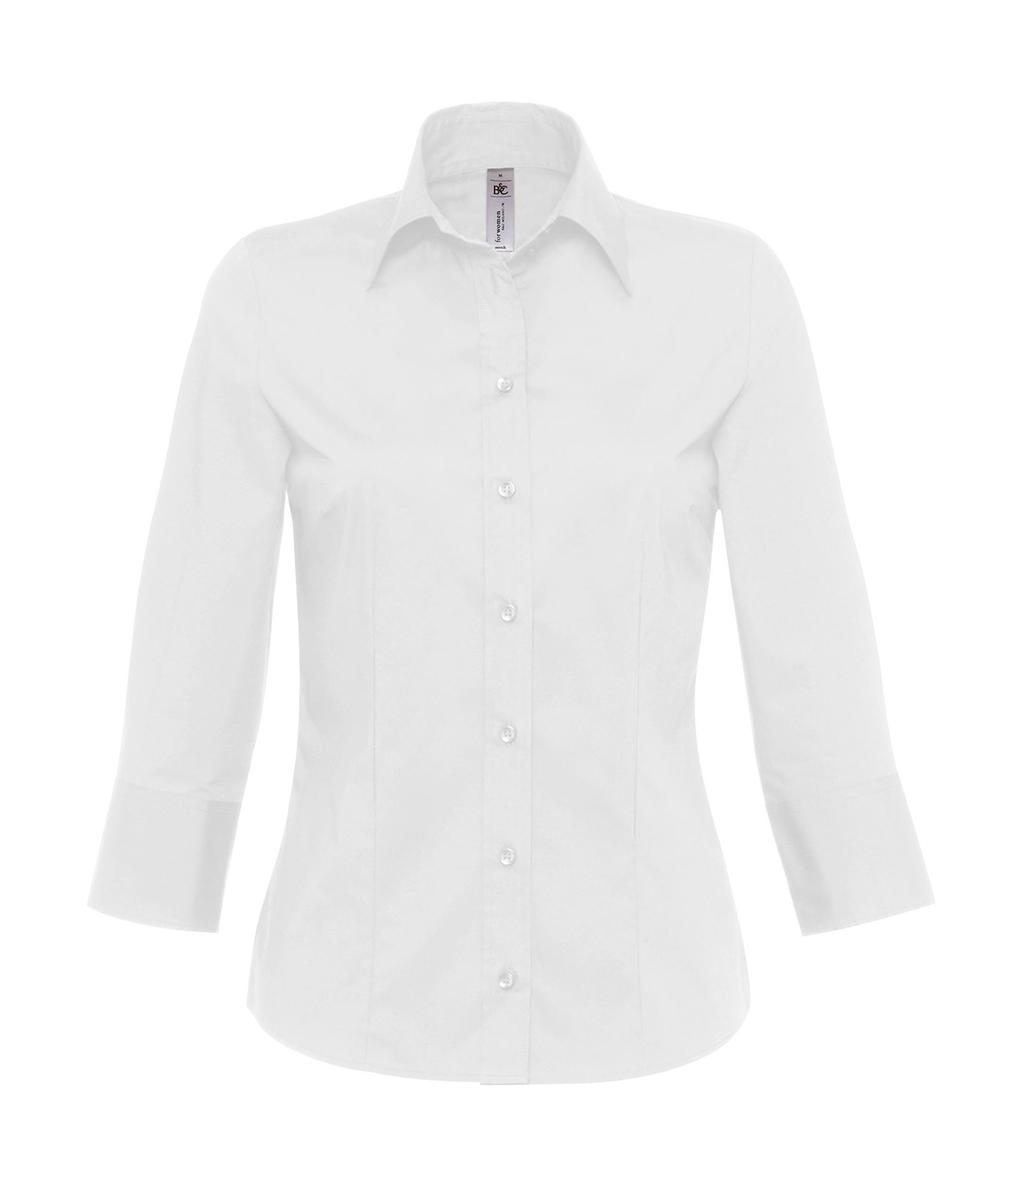  Milano/women Popelin Shirt 3/4 sleeves in Farbe White